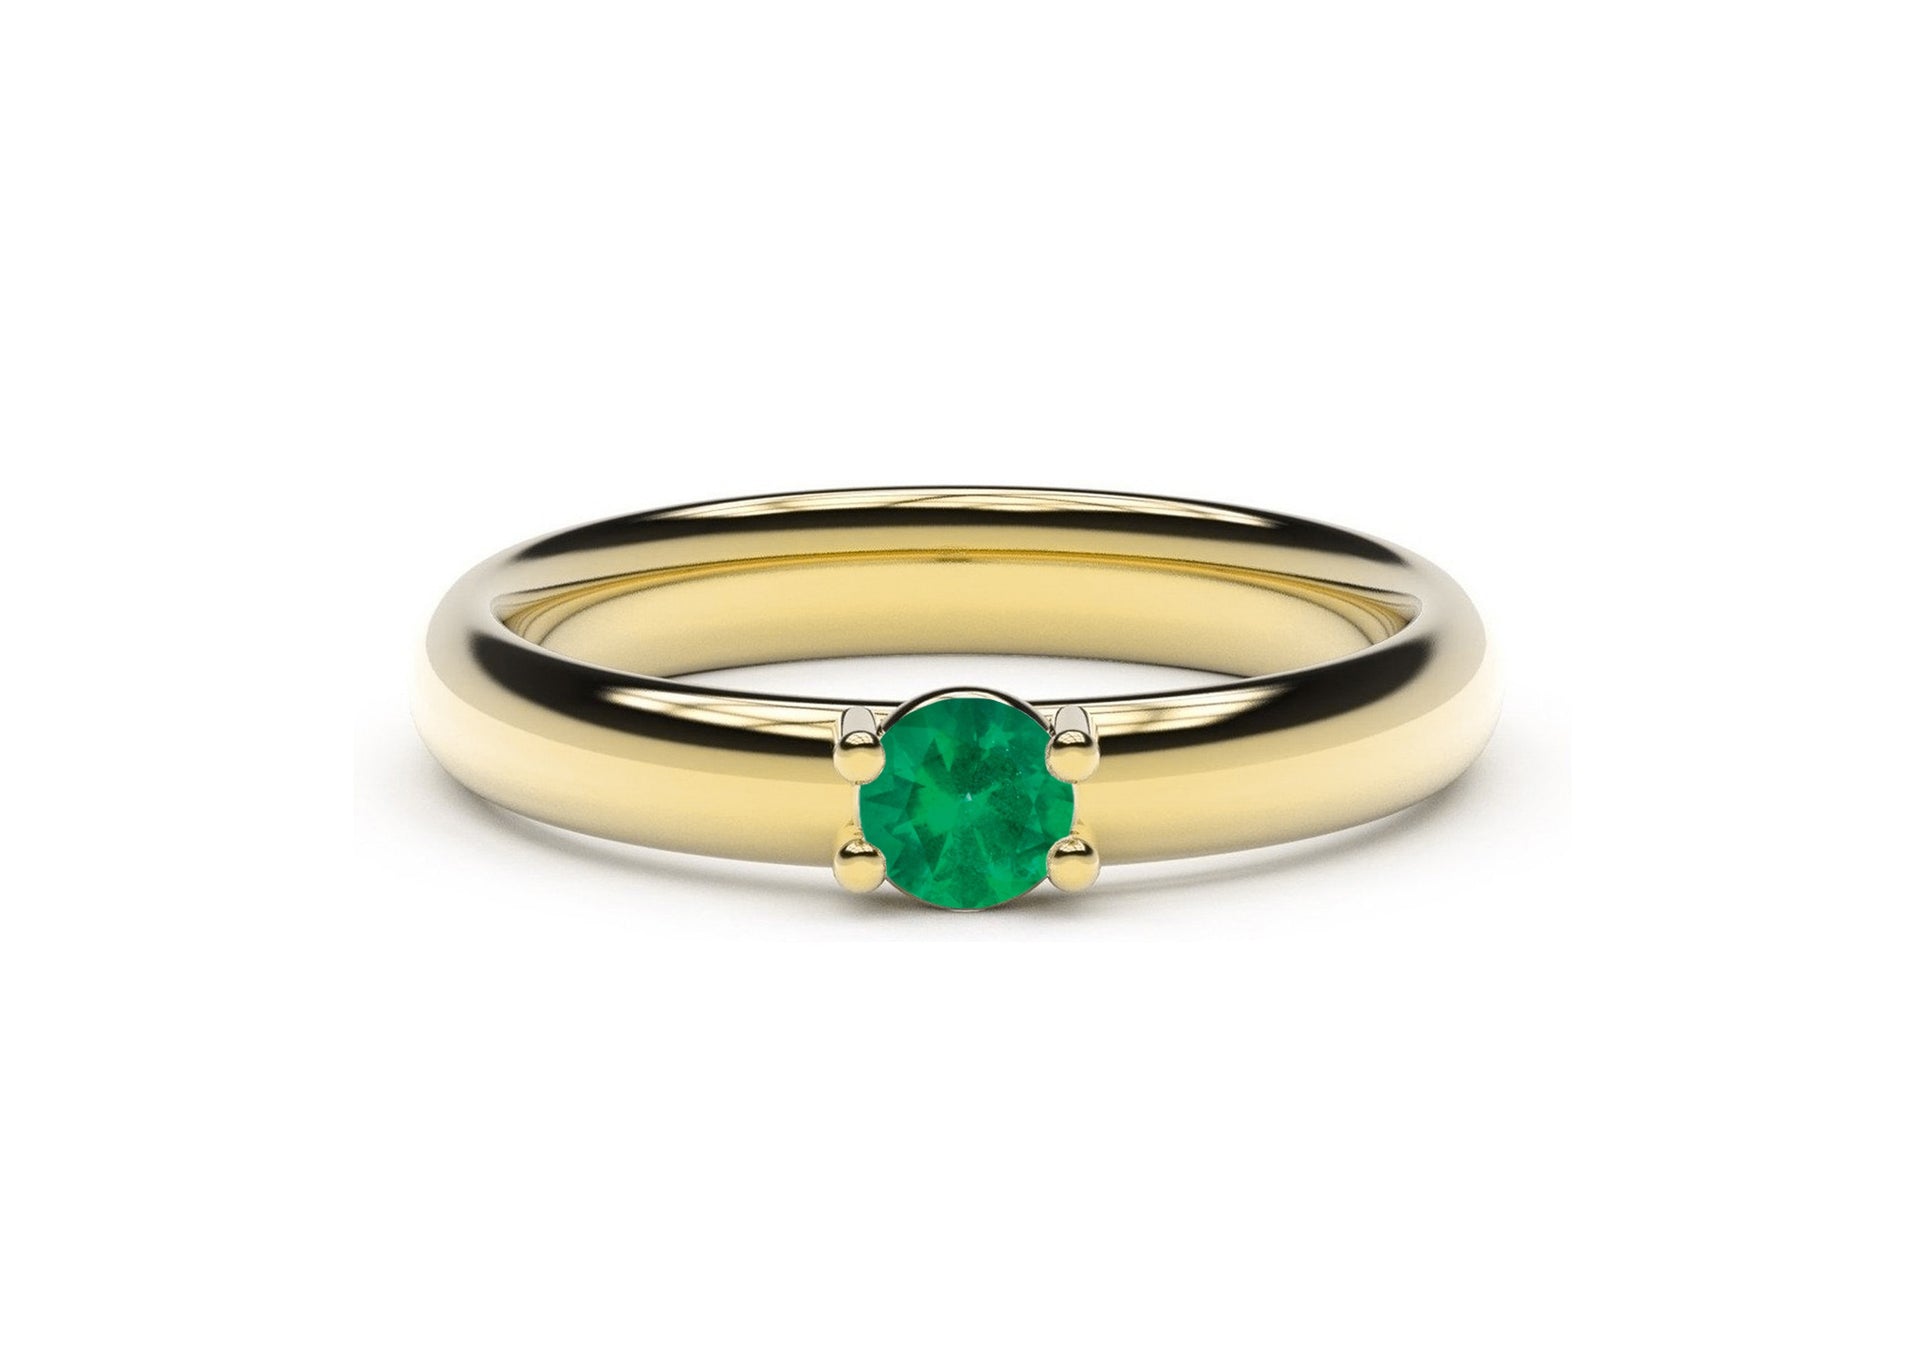 Contemporary Slim Precious Gemstone Engagement Ring, Yellow Gold